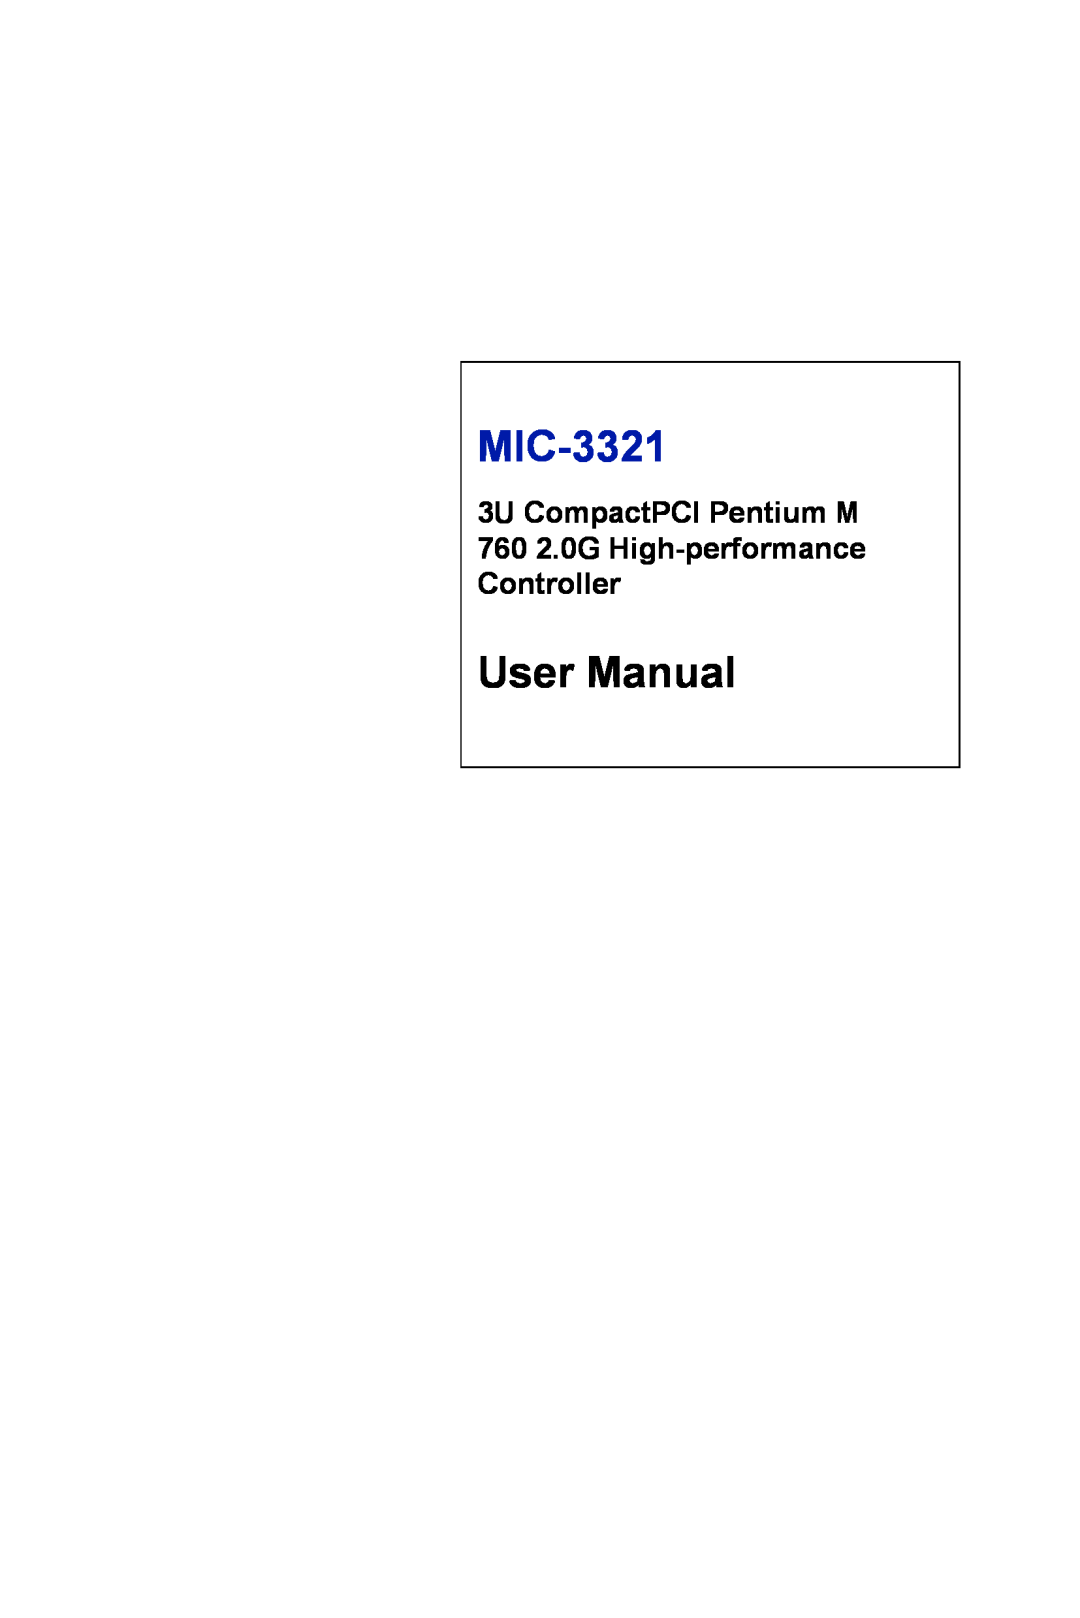 Intel 3U Compact PCI user manual User Manual, MIC-3321, 3U CompactPCI Pentium M, 7602.0G High-performanceController 